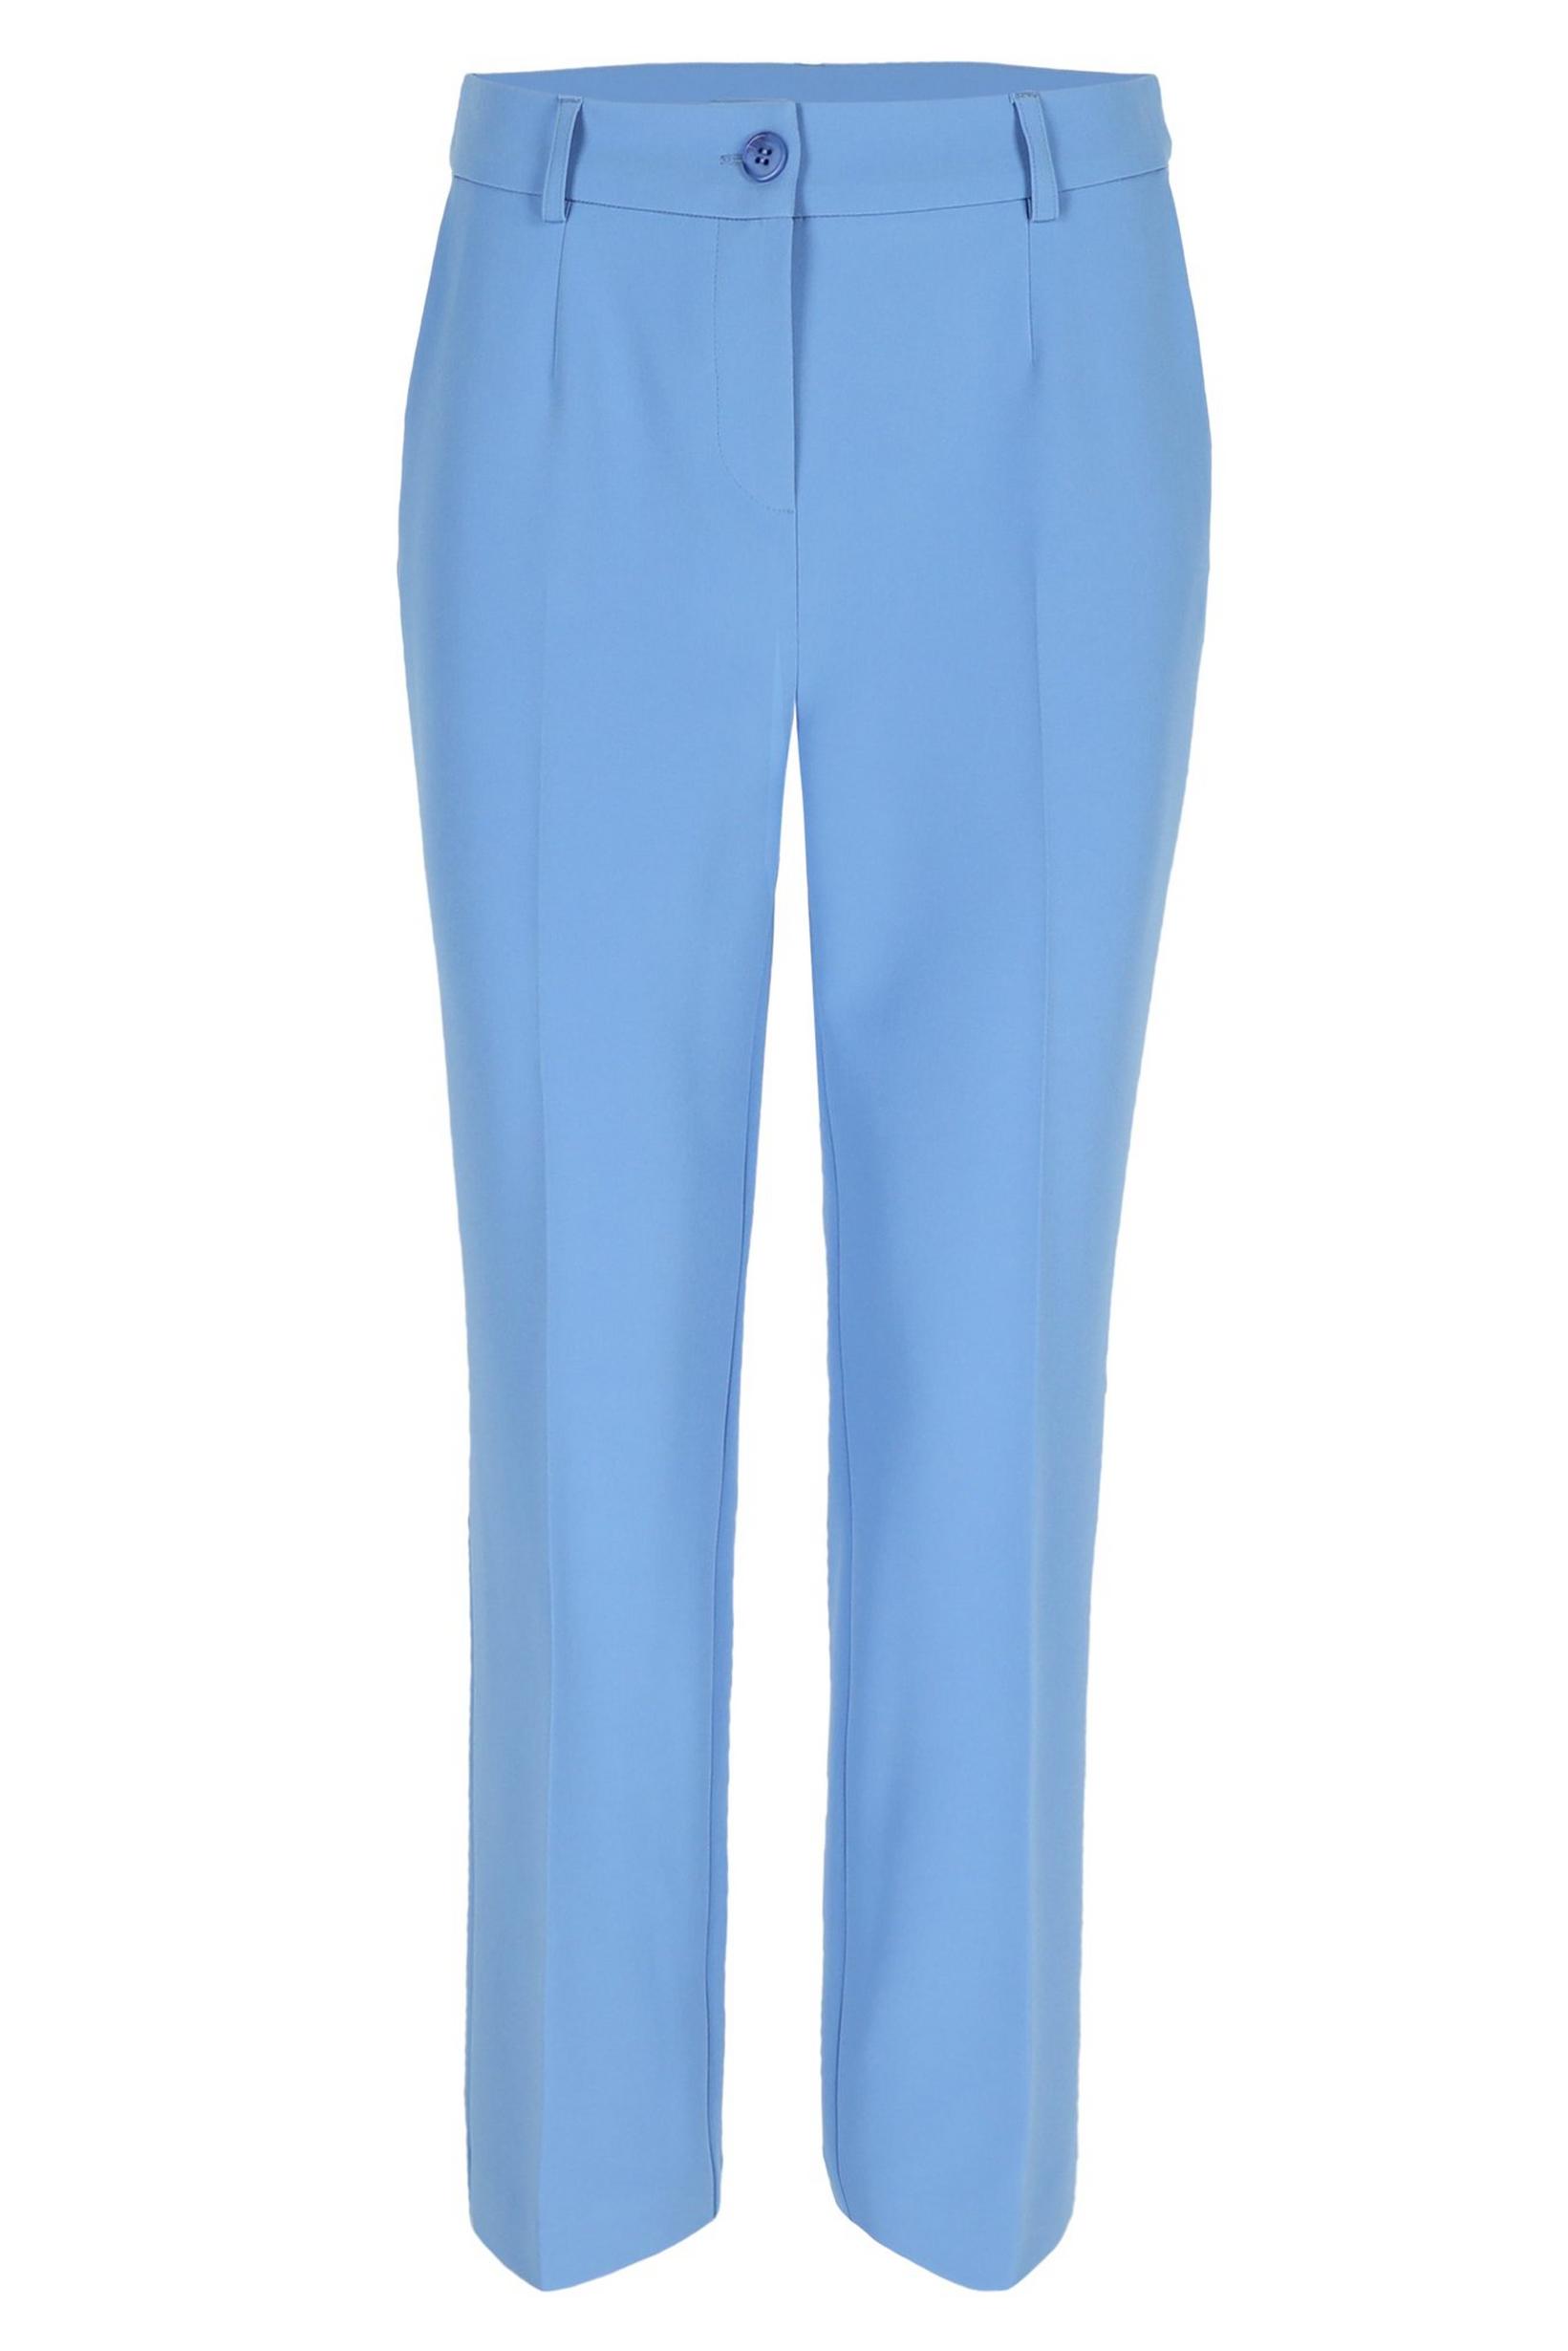 Pantalon Mayerline bleu pâle (Cate 1059/534)